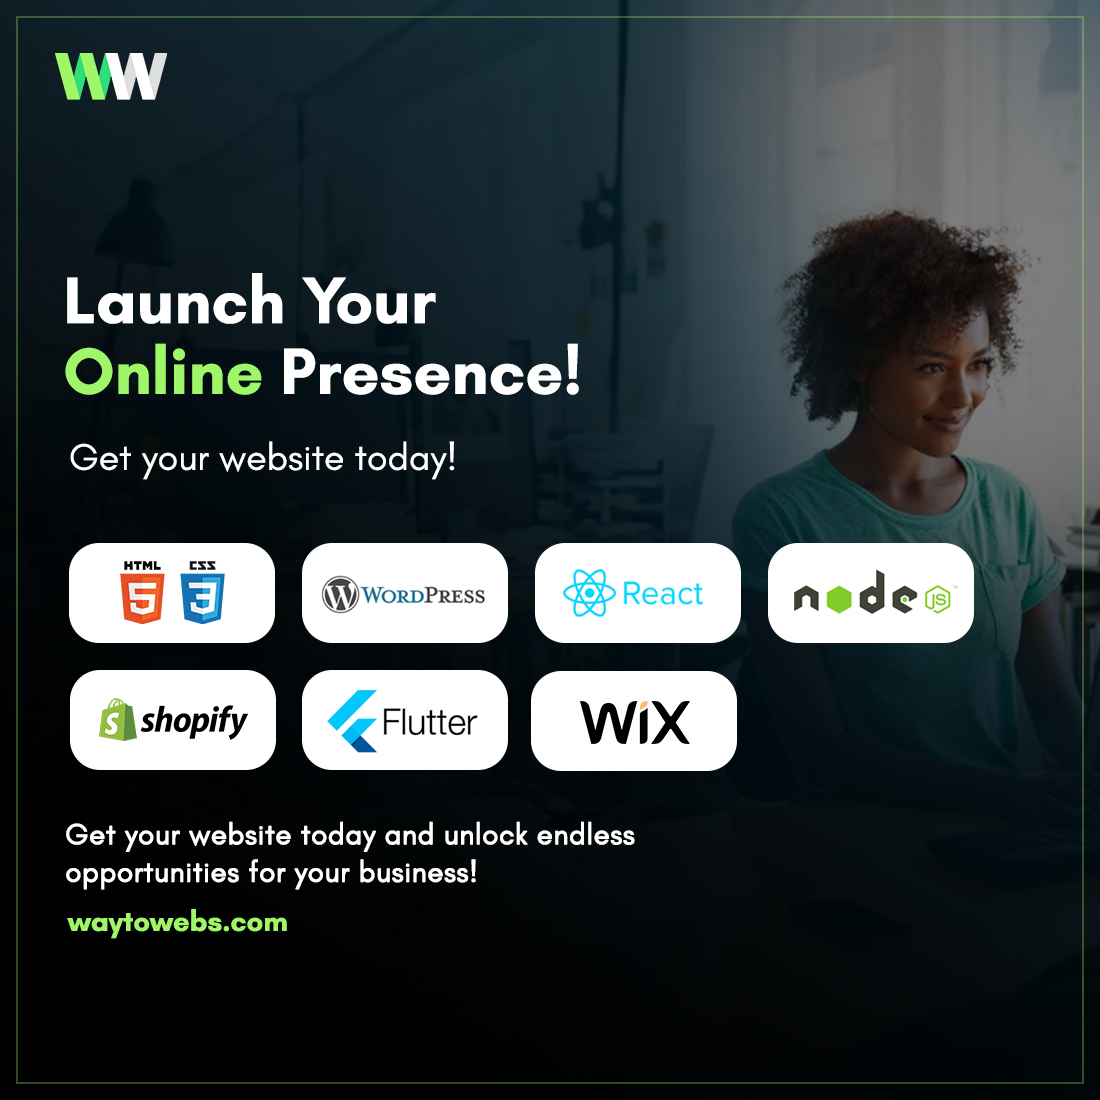 🚀 Ready to launch your online presence? #webdevelopment #webdesign #websitedesigners #website #wordpress #html #css #javascript #reactjs #nodejs #reactwebsite #shopify #wix #flutter #designers #busniness #waytowebs waytowebs.com posts.gle/QceYBJ